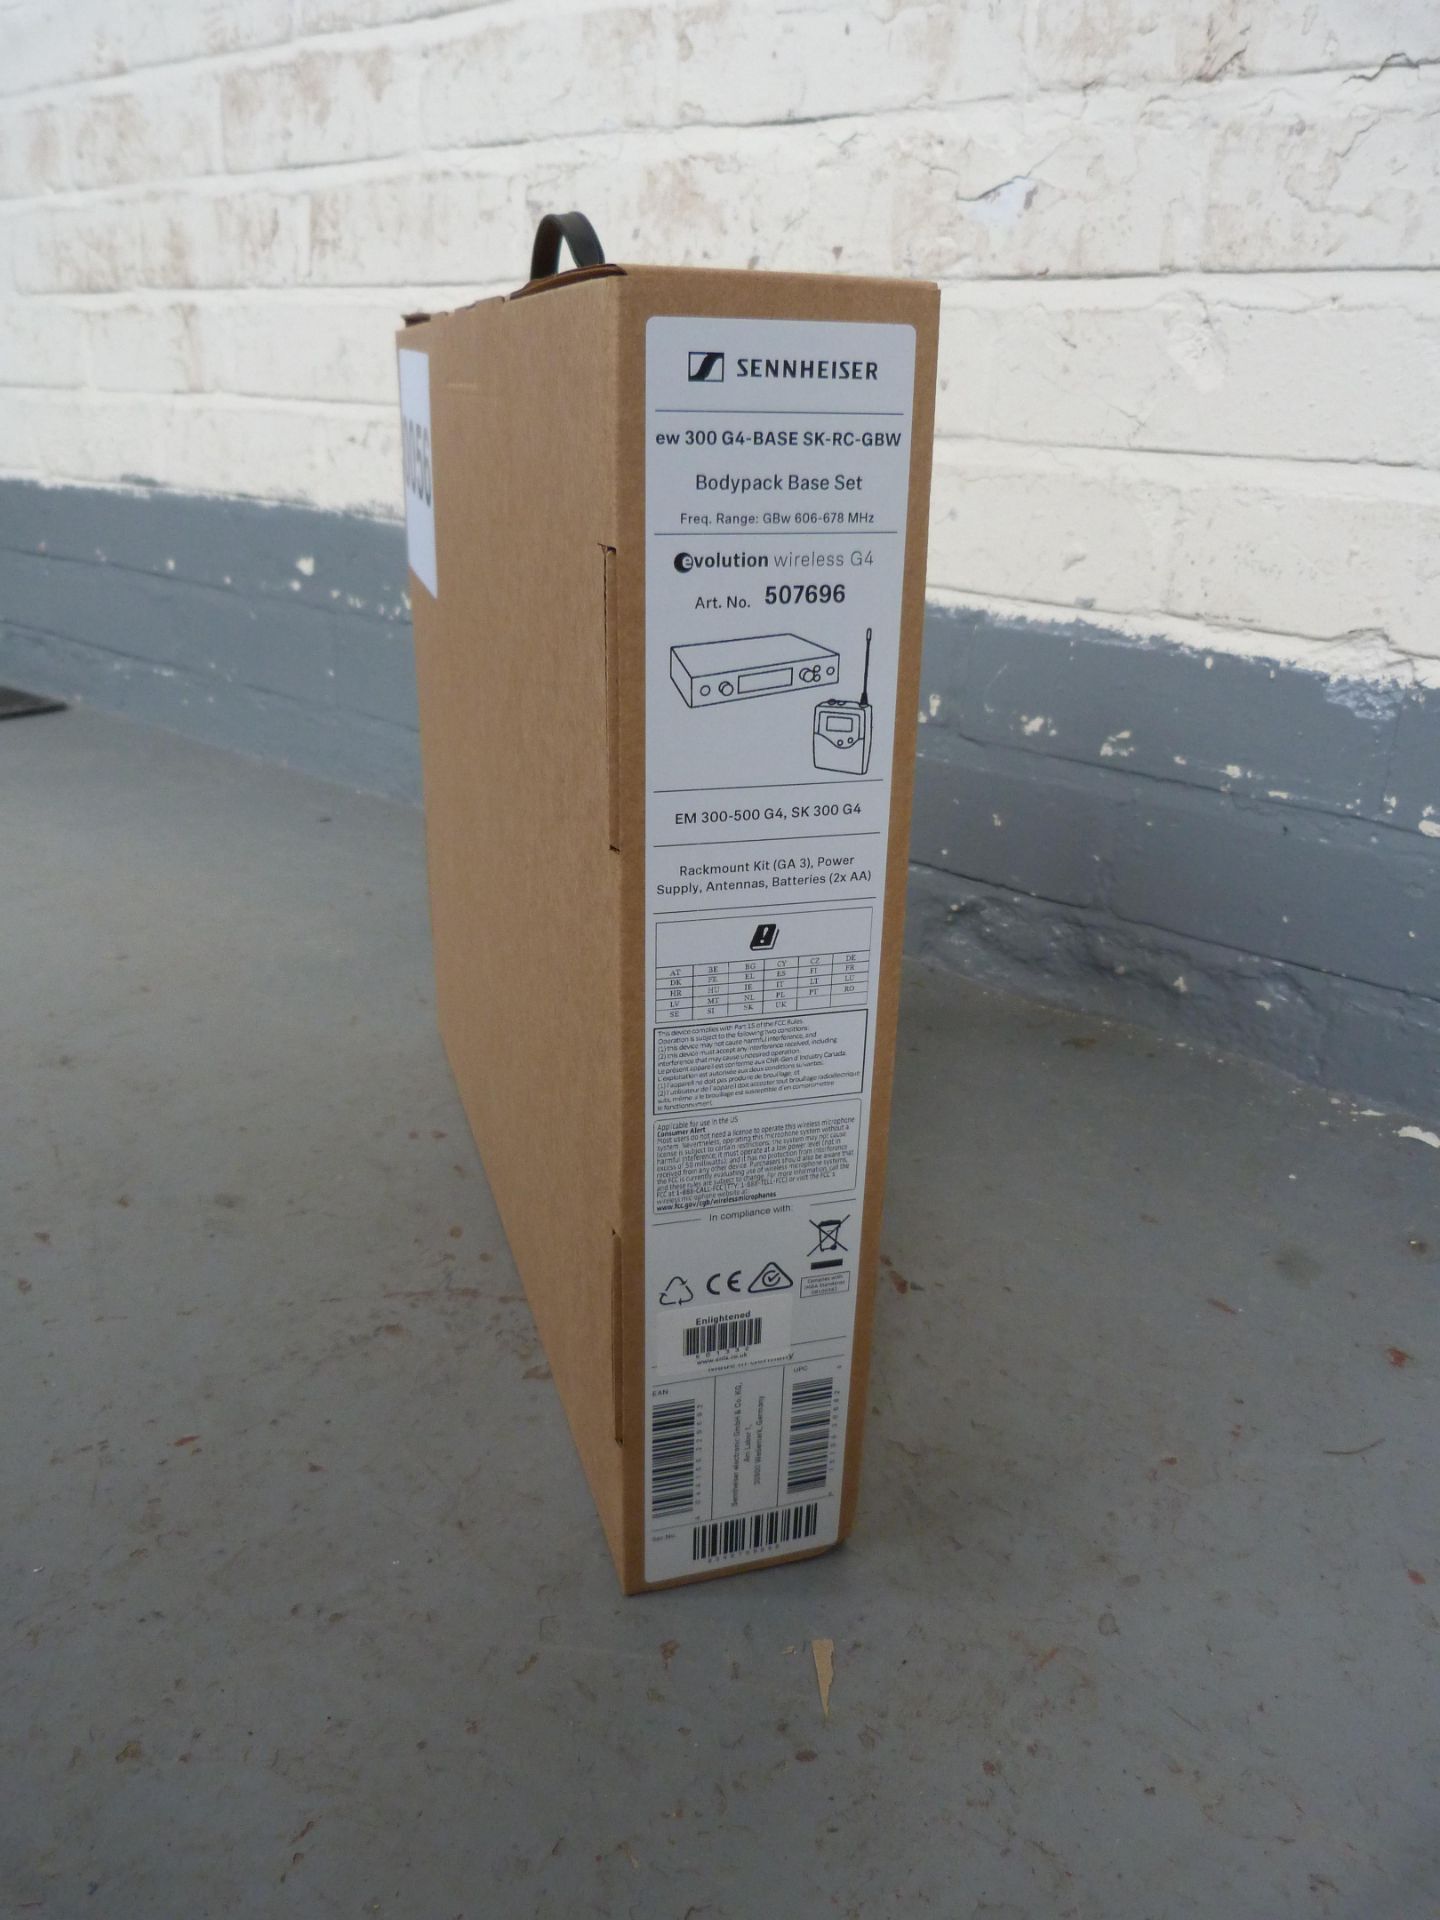 Sennheiser EW 300 G4-BASE SK-RC-GBW Bodypack Base Set 507696. In Cardboard. Serial No: 8348709858 - Image 2 of 5